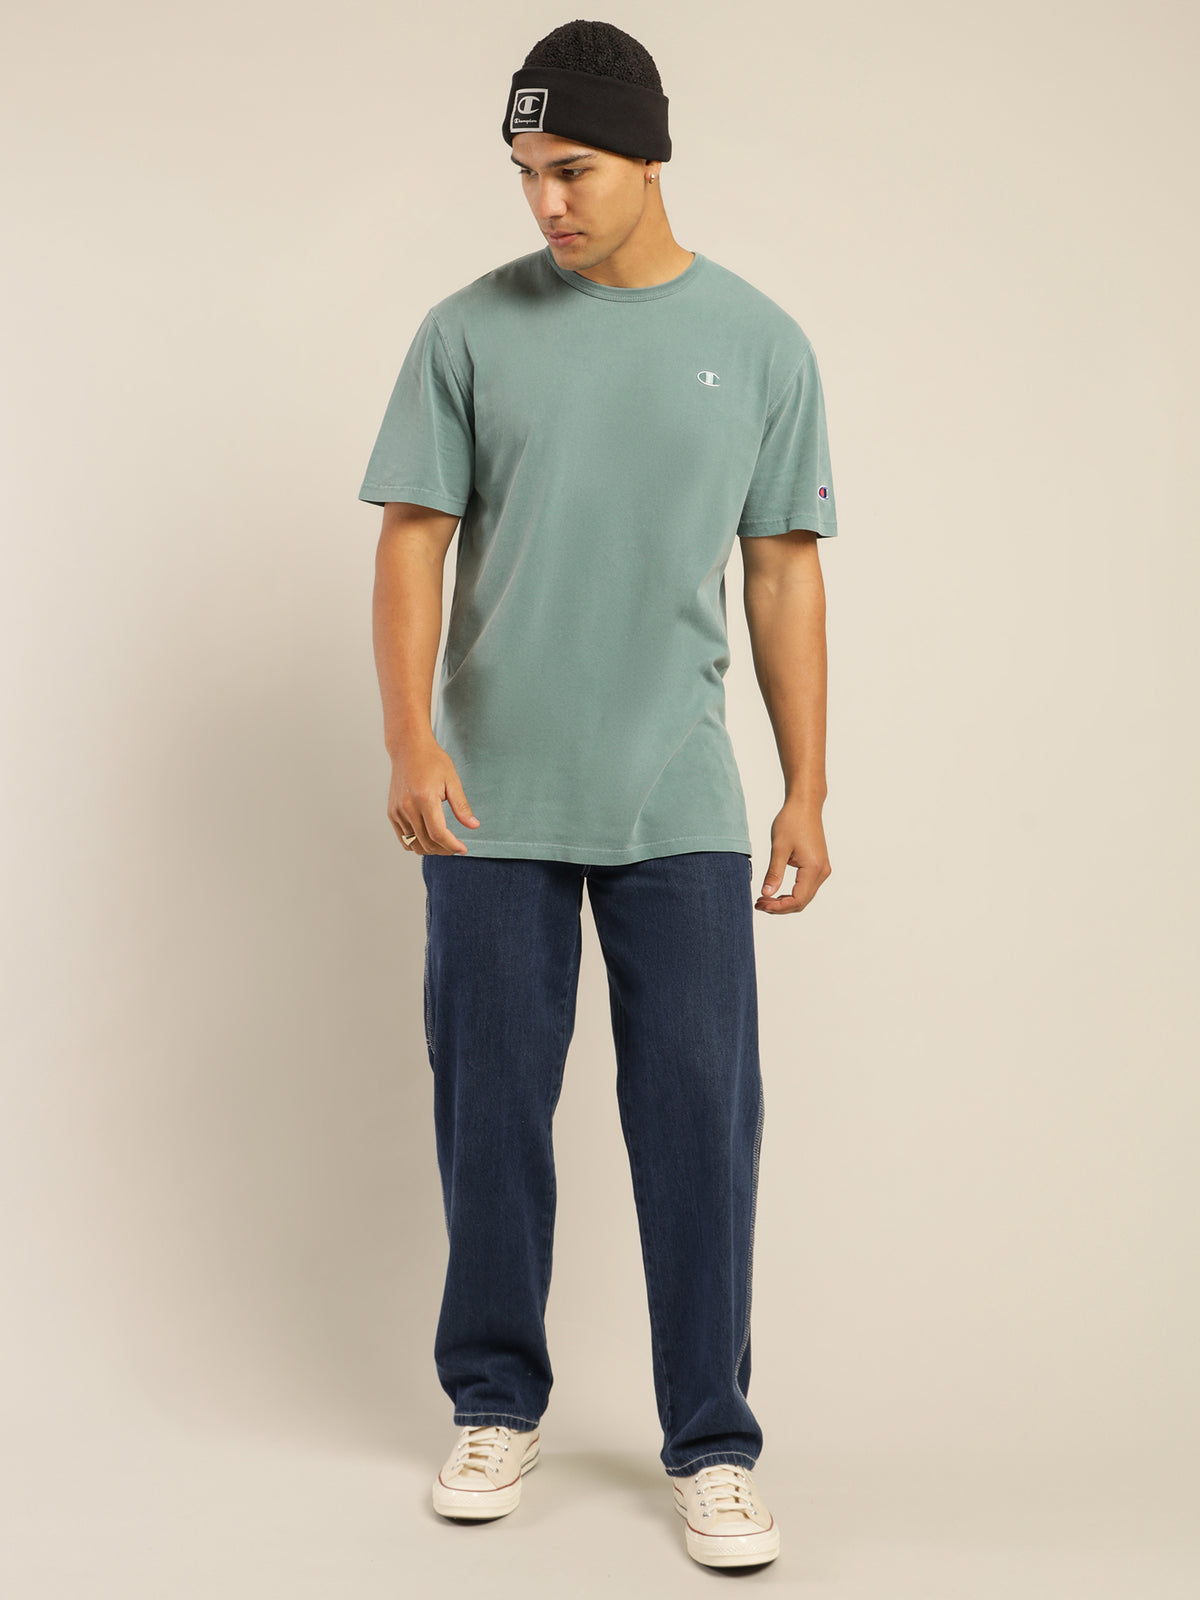 Heritage Garment Dye T-Shirt in Aqua Tonic